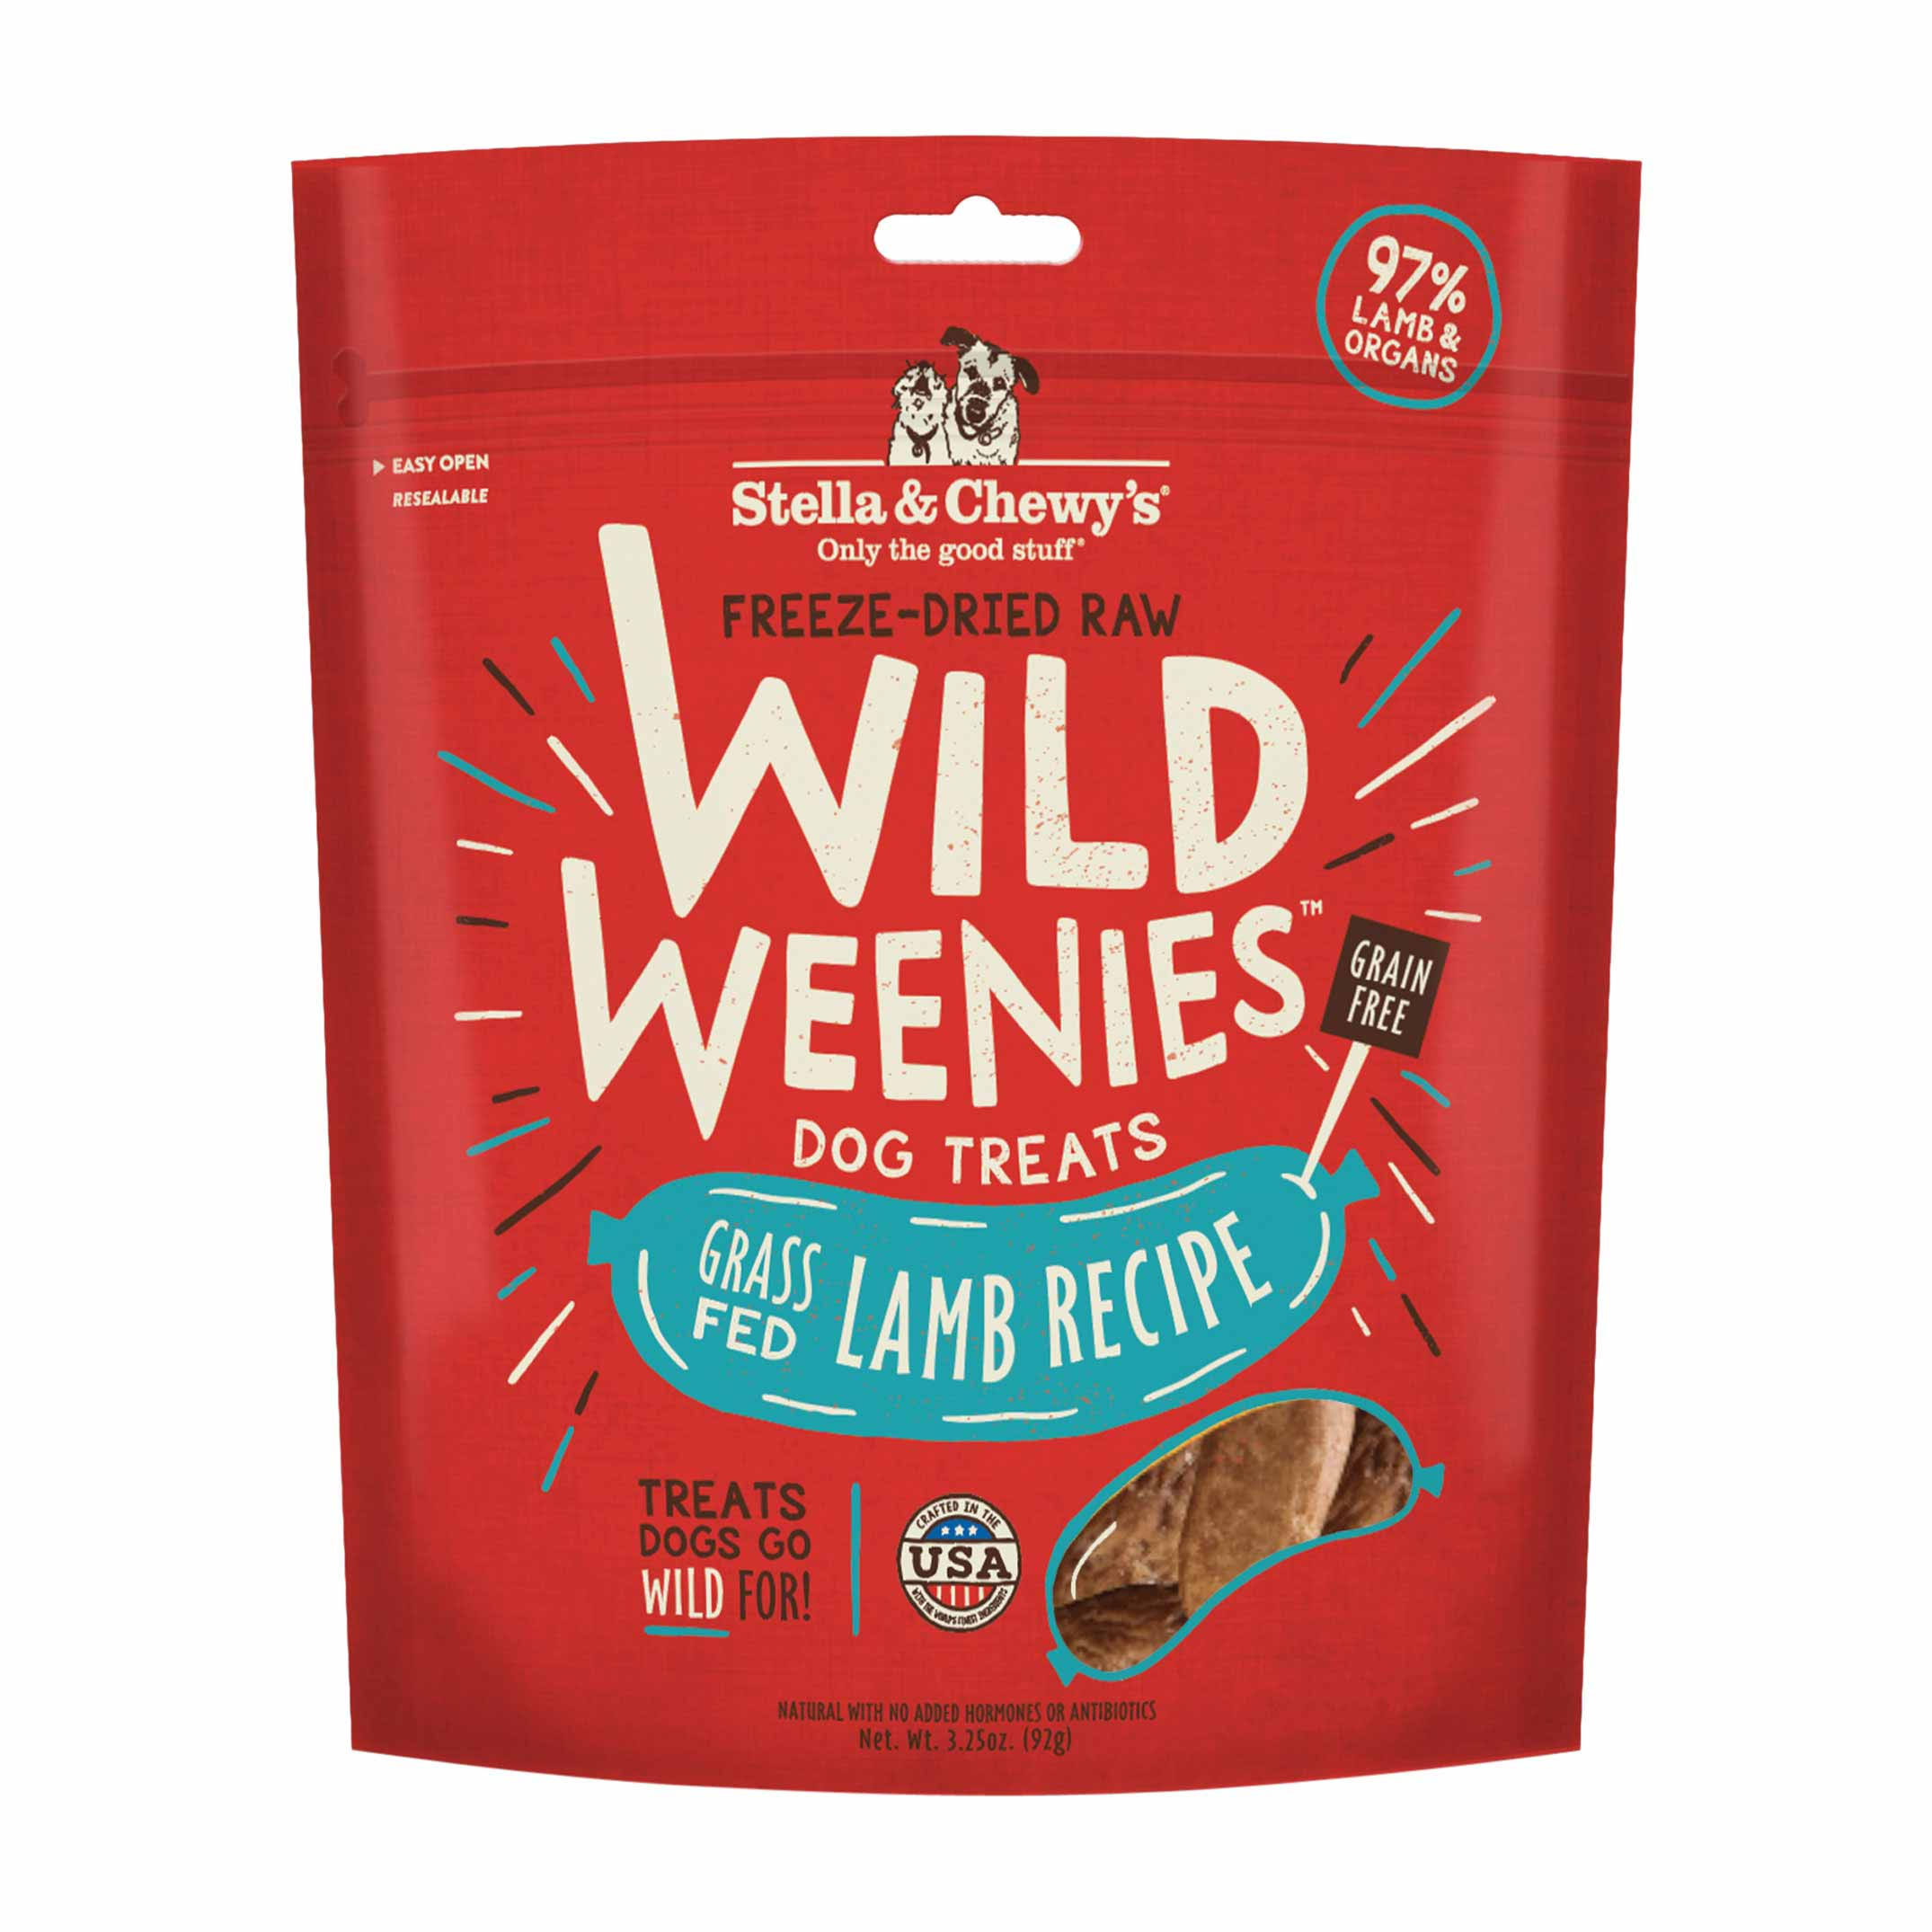 Stella & Chewy's Freeze-Dried Raw Lamb Wild Weenies Dog Treats, 3.25 oz Bag